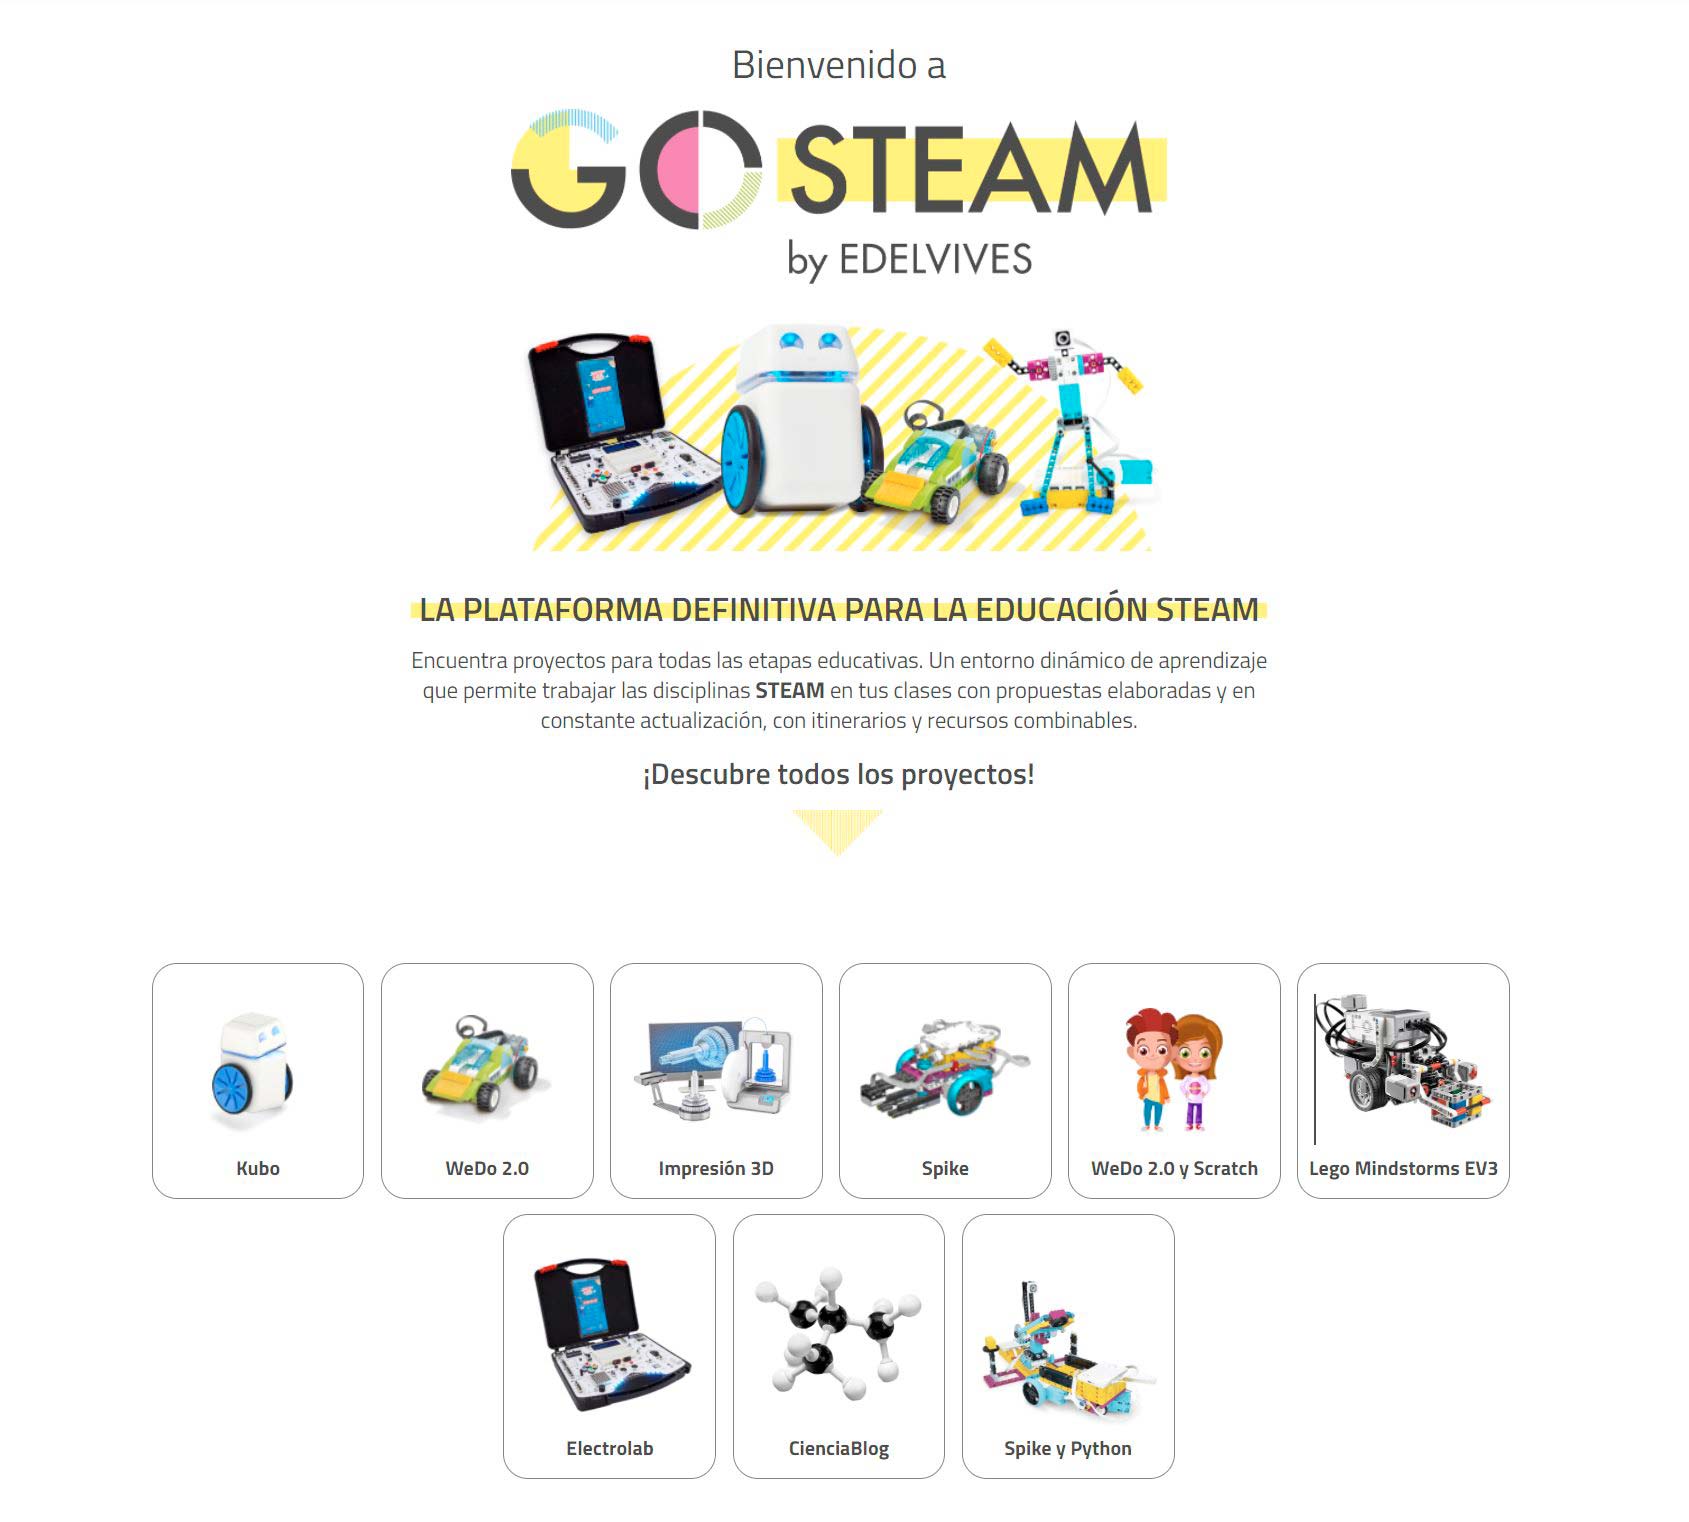 Go Steam by Edelvives